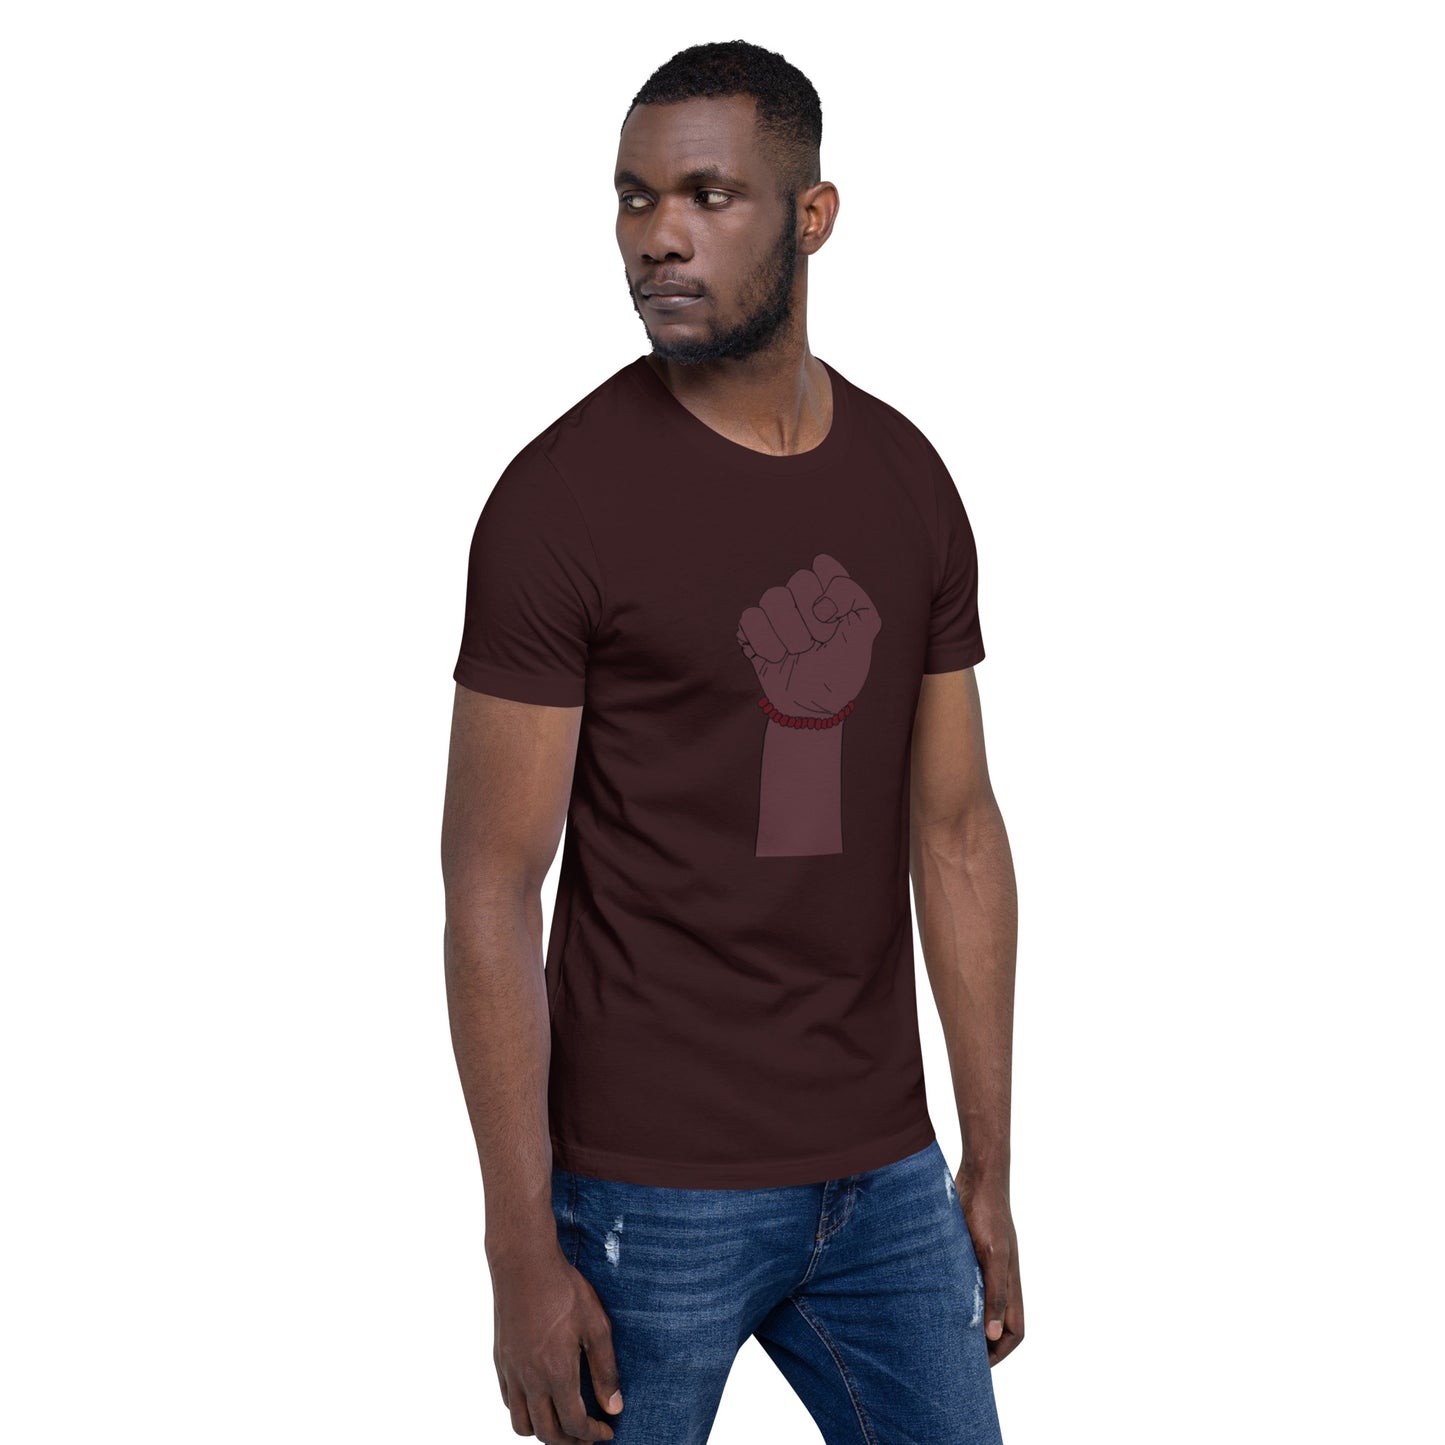 Oya Men's Ide T-shirt